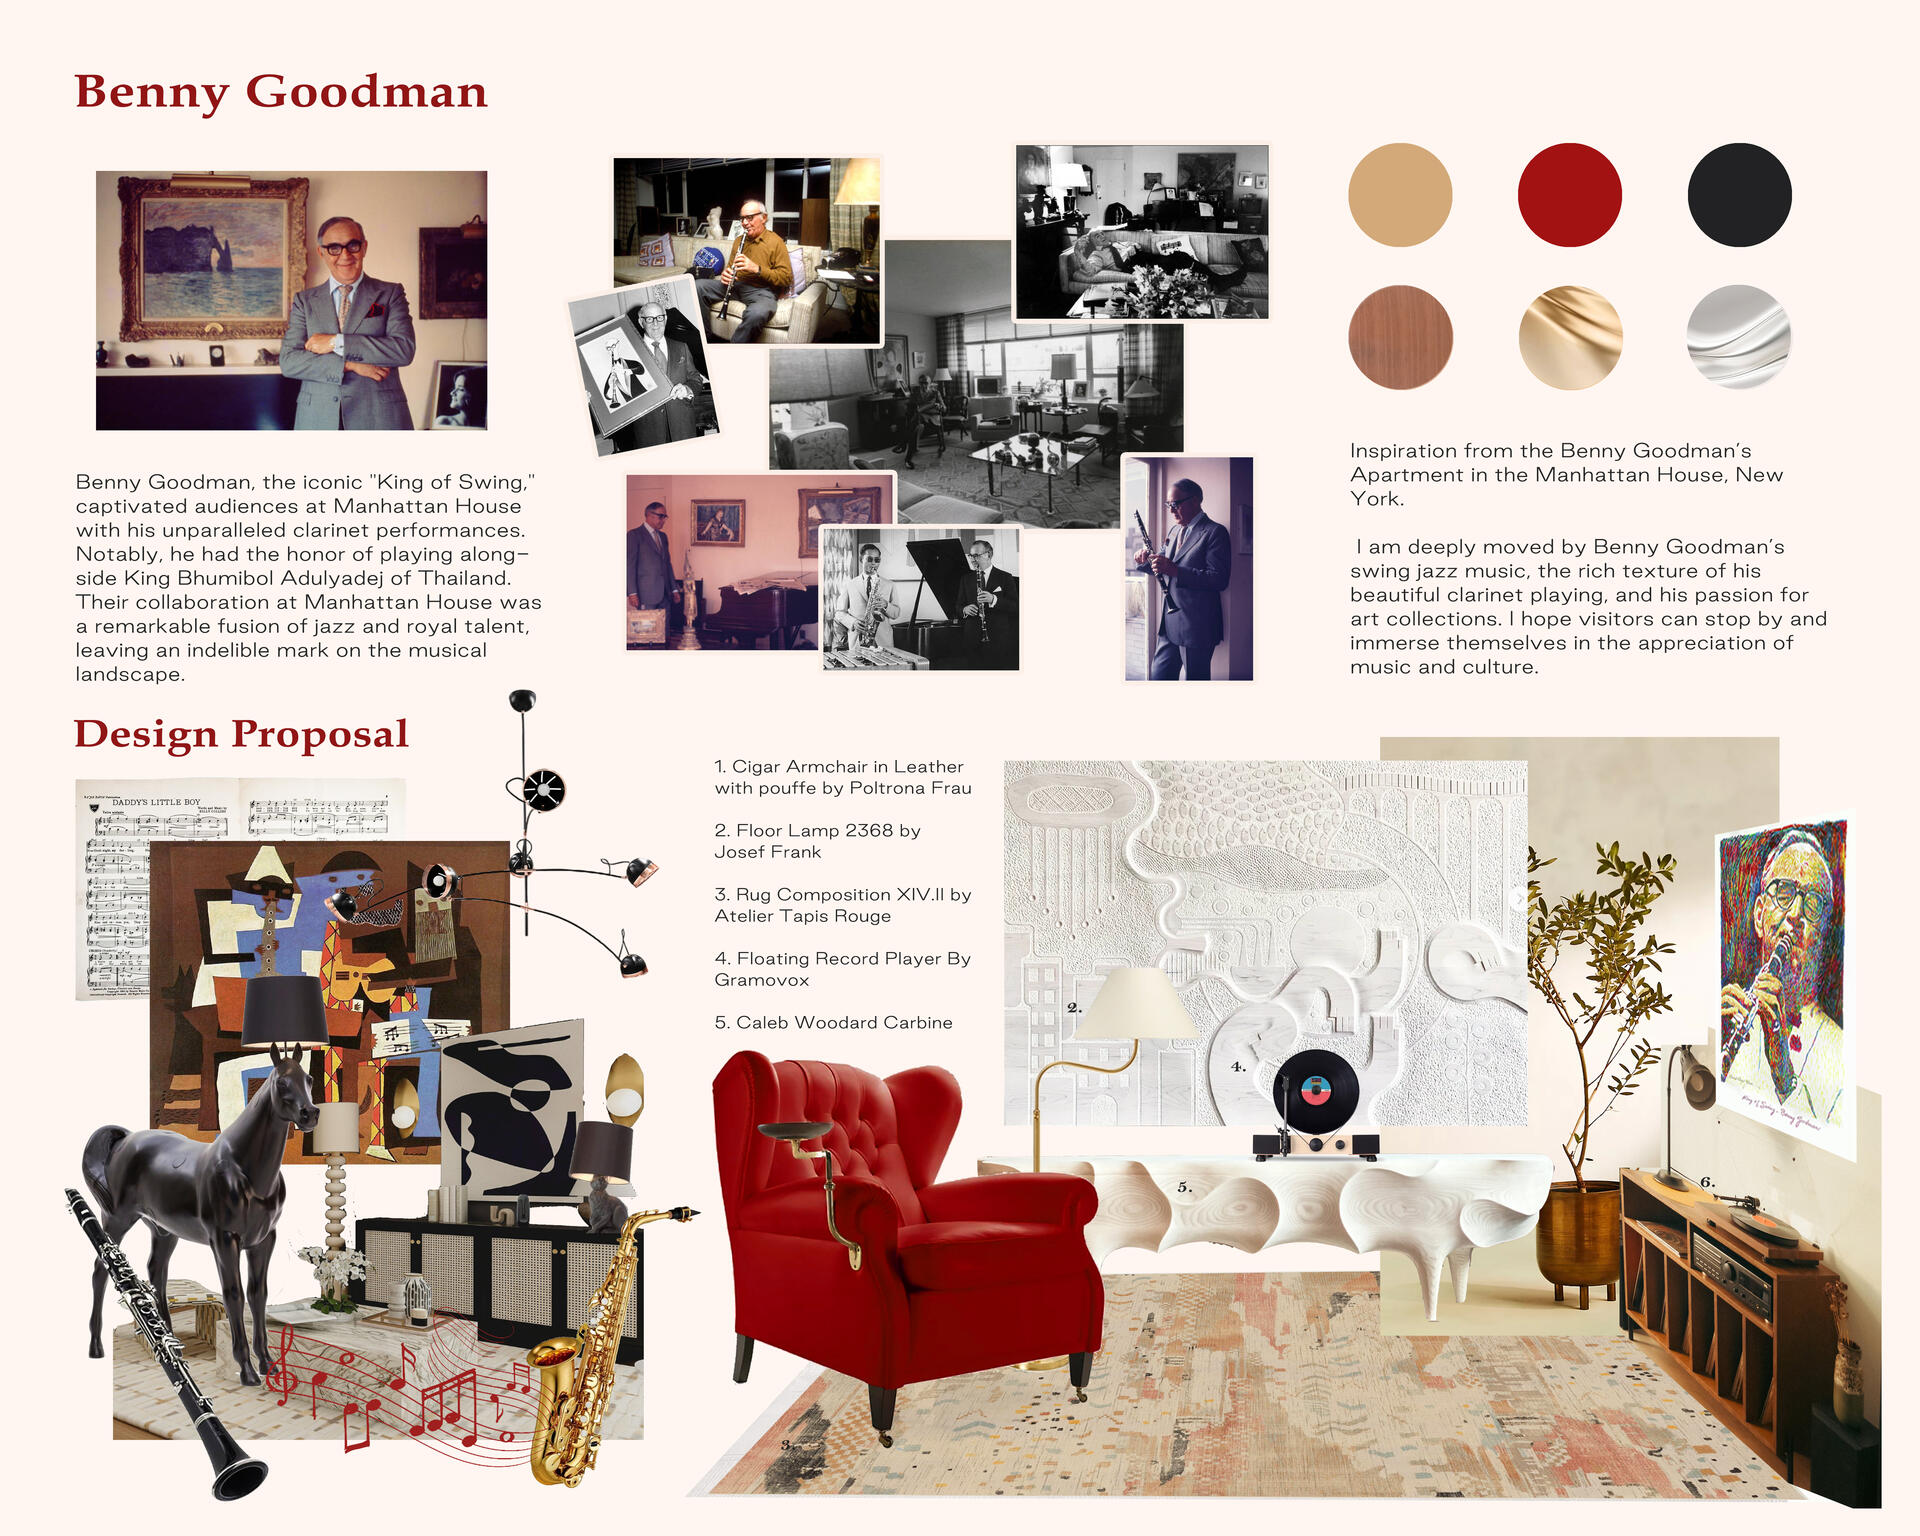 Benny Goodman Inspired Interior Design Proposal